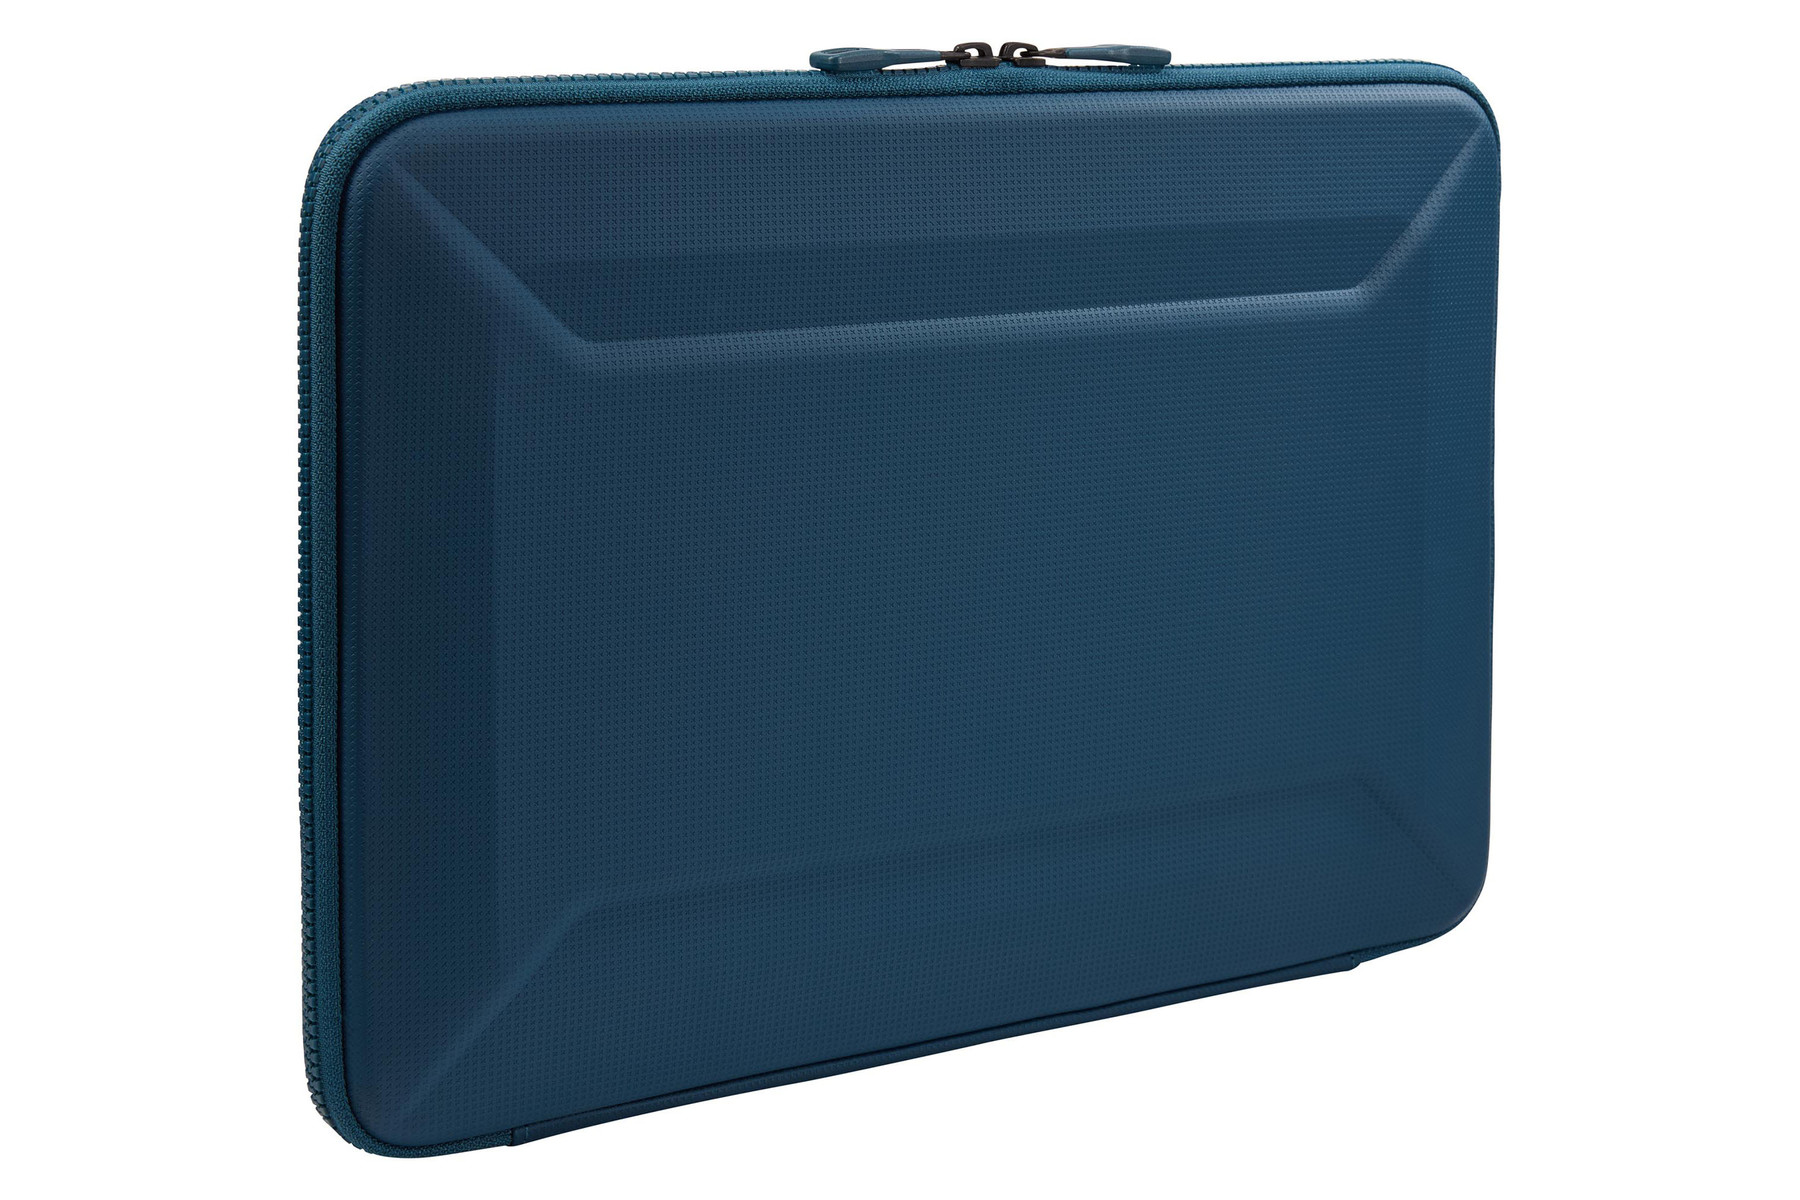 Чехол Thule 16-inch для MacBook Pro Gauntlet Sleeve Blue TGSE2357BLU / 3204524 сумка для ноутбука 11 13 дюймов шерстяной фетровый чехол для ноутбука чехол для macbook портфель чехол для ноутбука чехол для huawei matebook сумка д